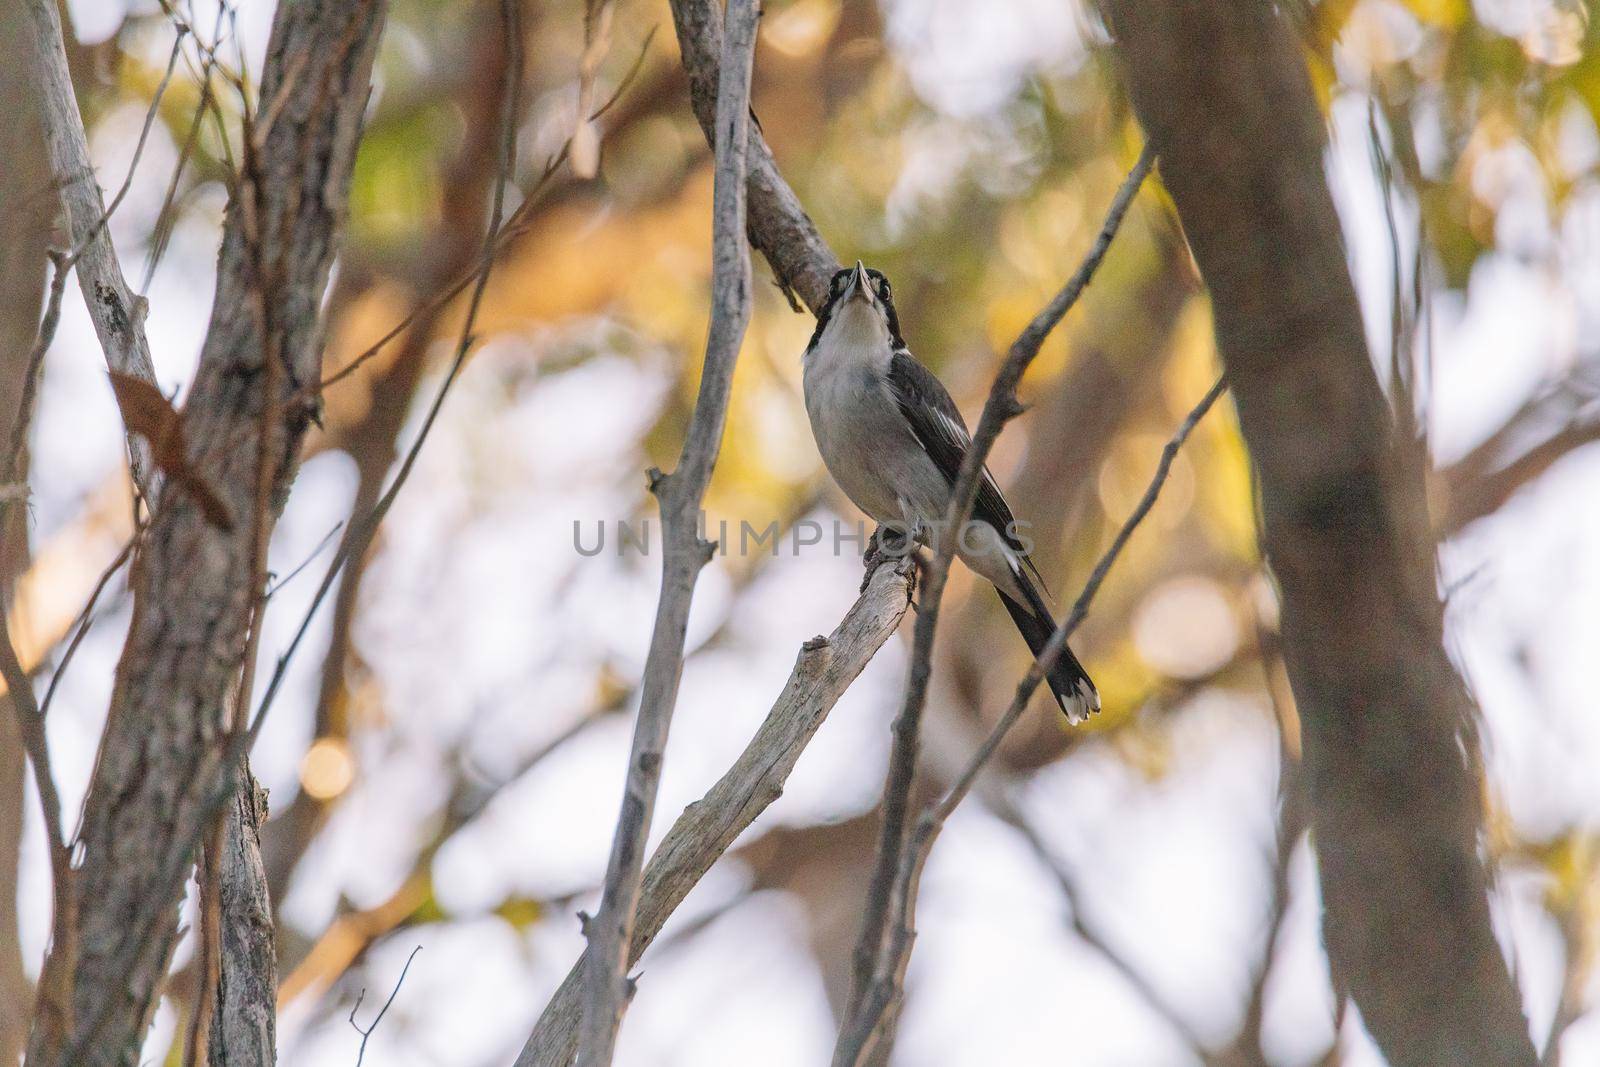 Australian Grey Butcherbird resting on branch. High quality photo